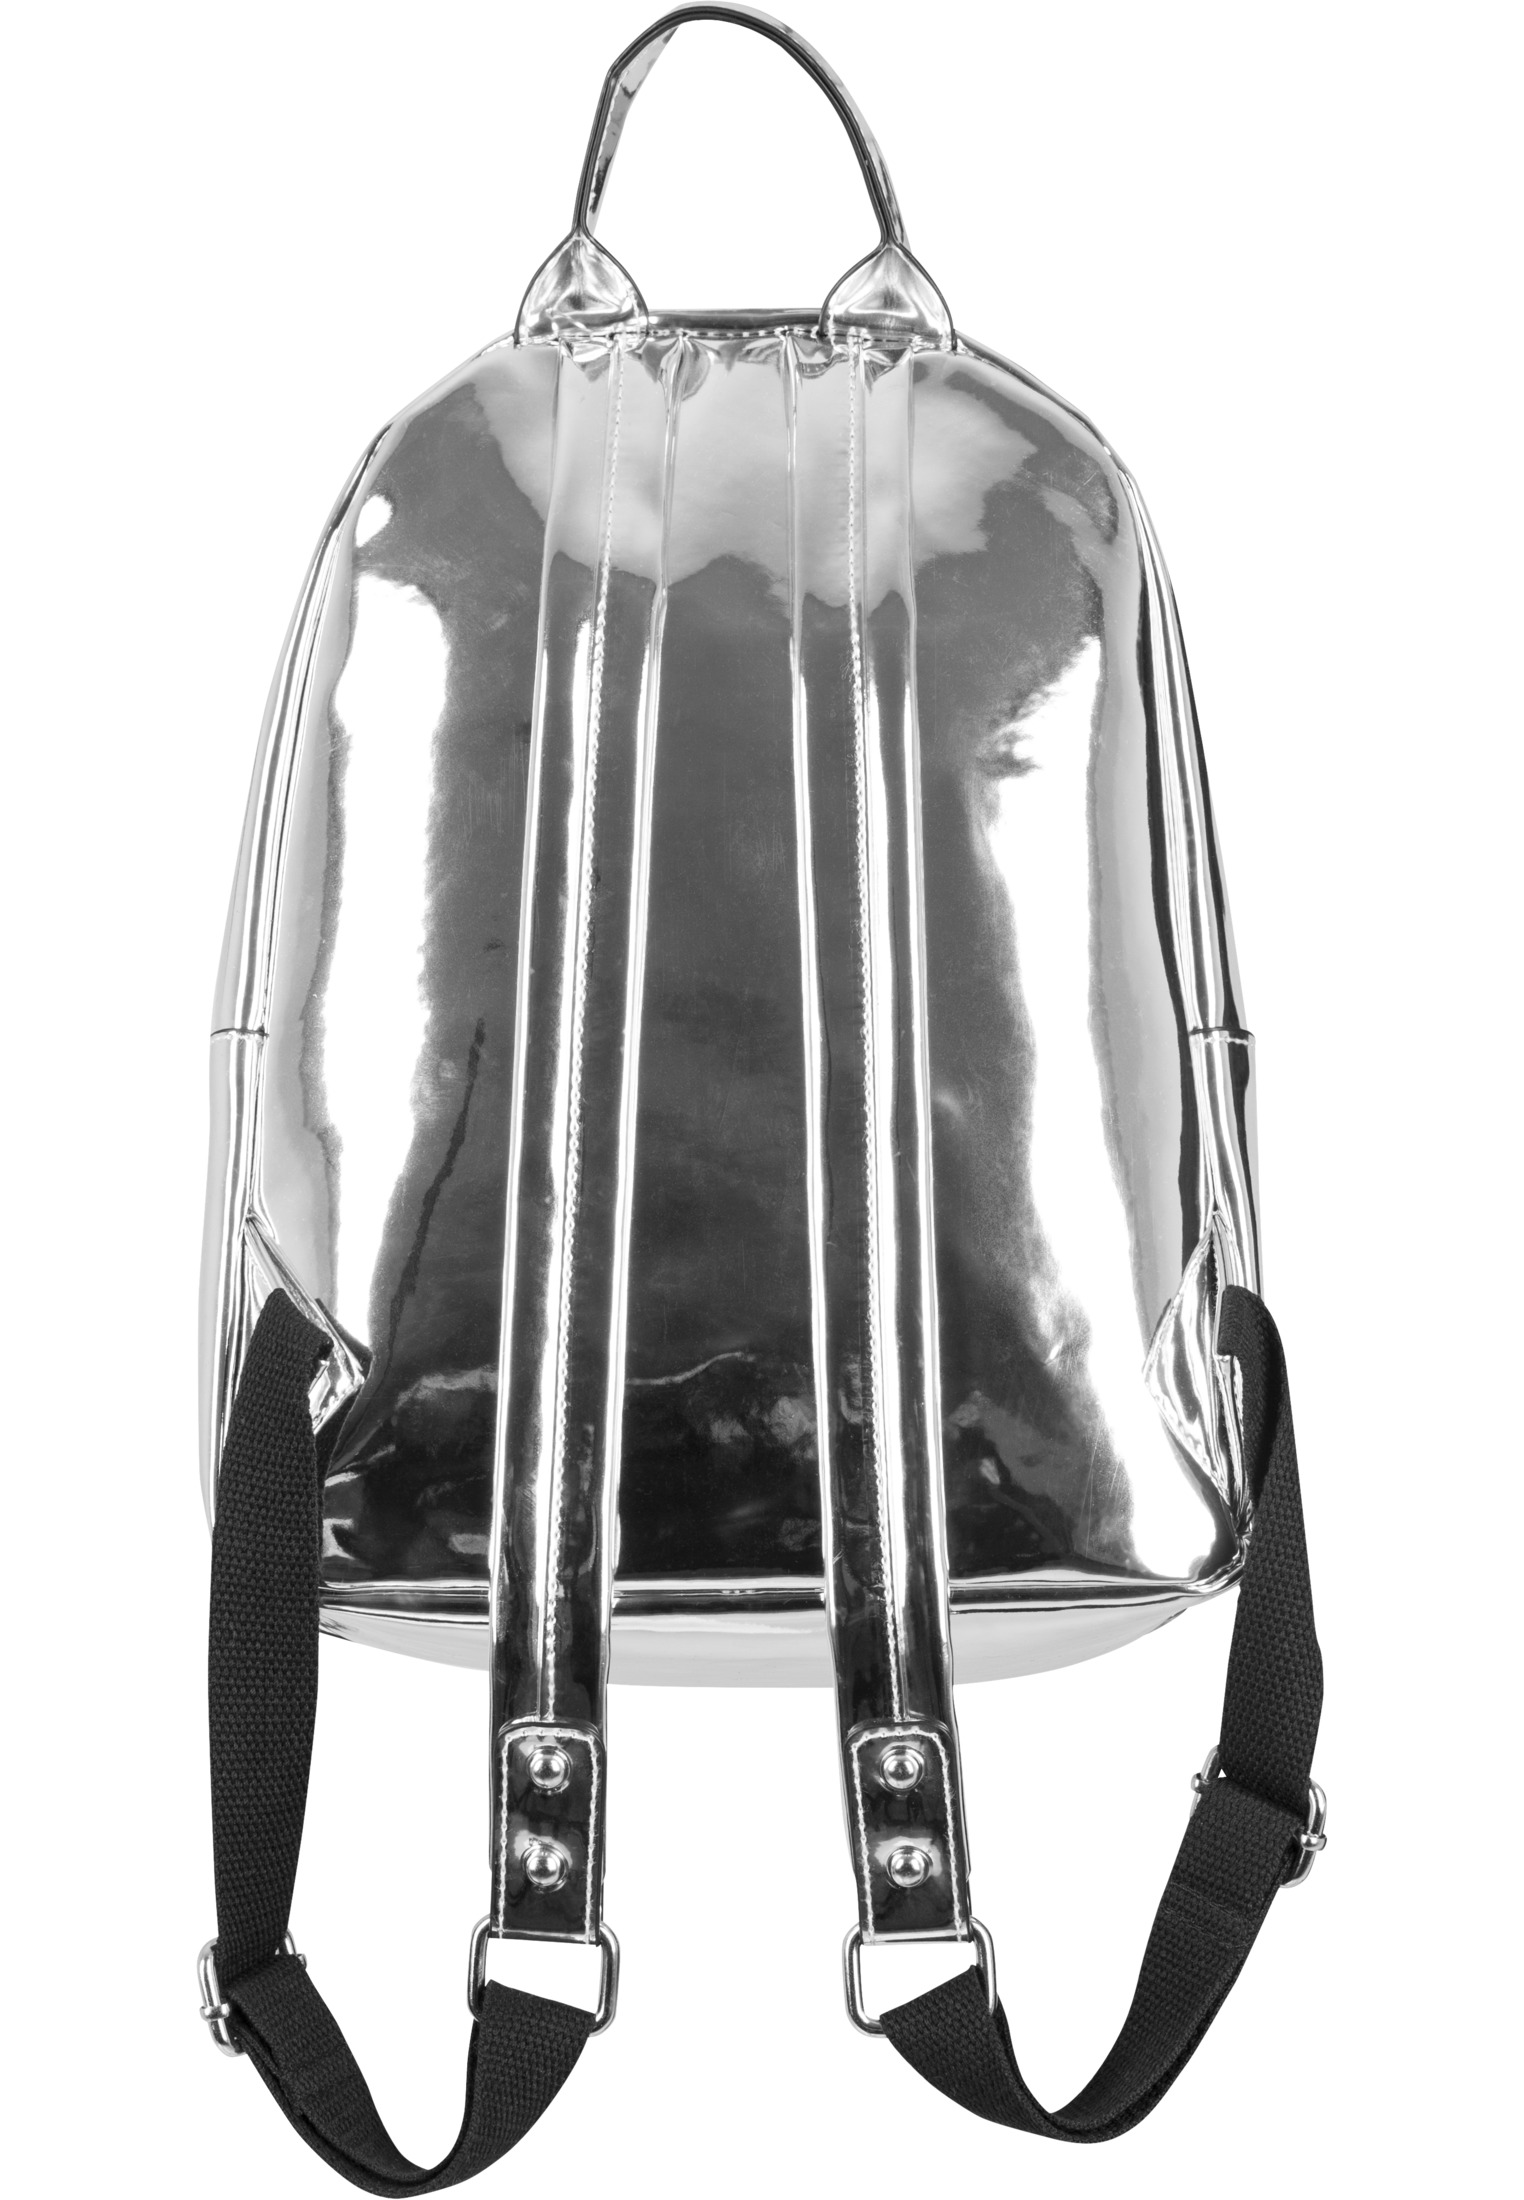 Accessories Midi Metallic Backpack in Farbe silver